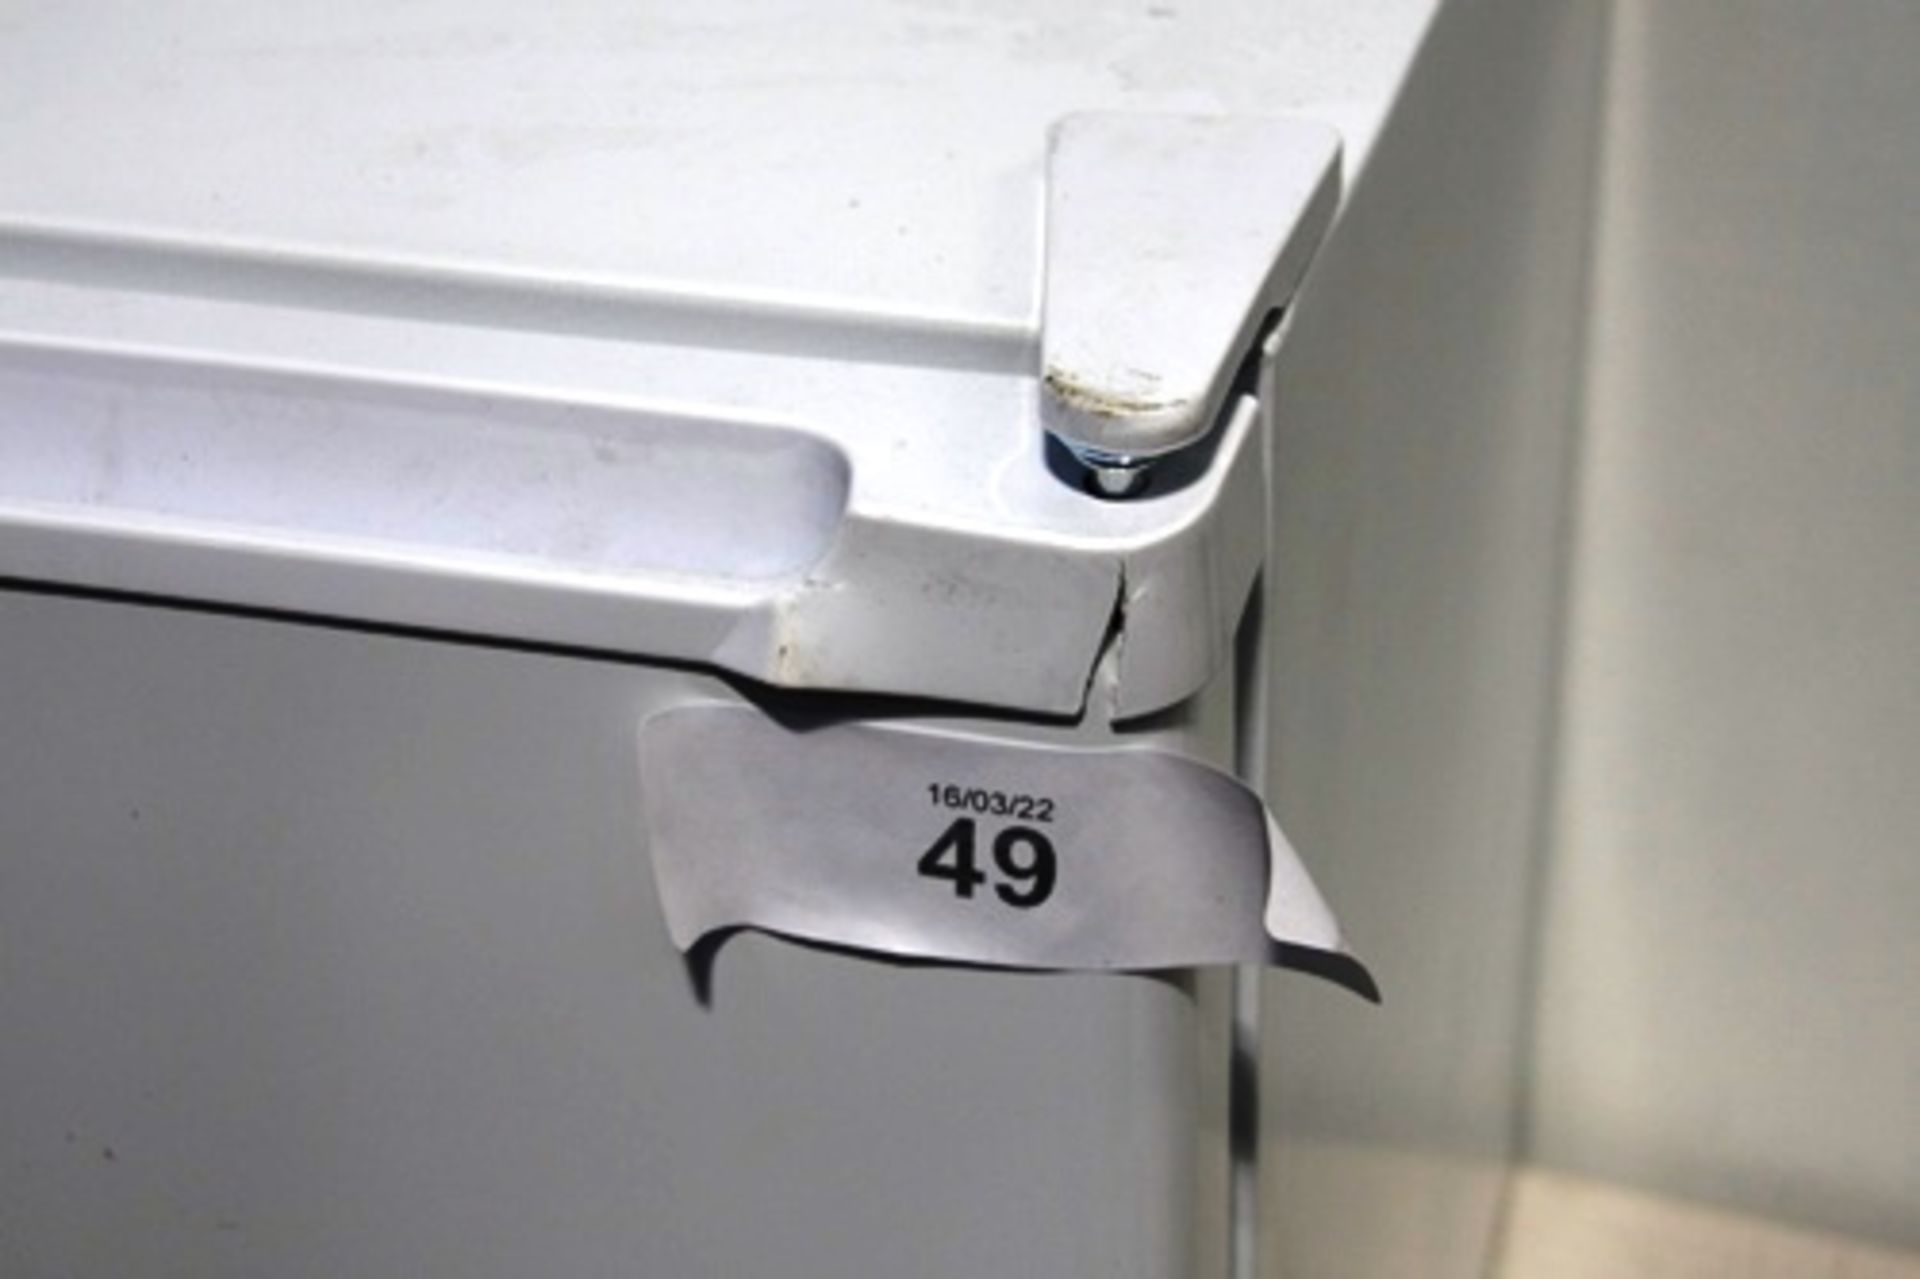 1 x Igenix table-top freezer, model IG3751 - New in box, box tatty, cosmetic damage to door (ES1) - Image 2 of 5